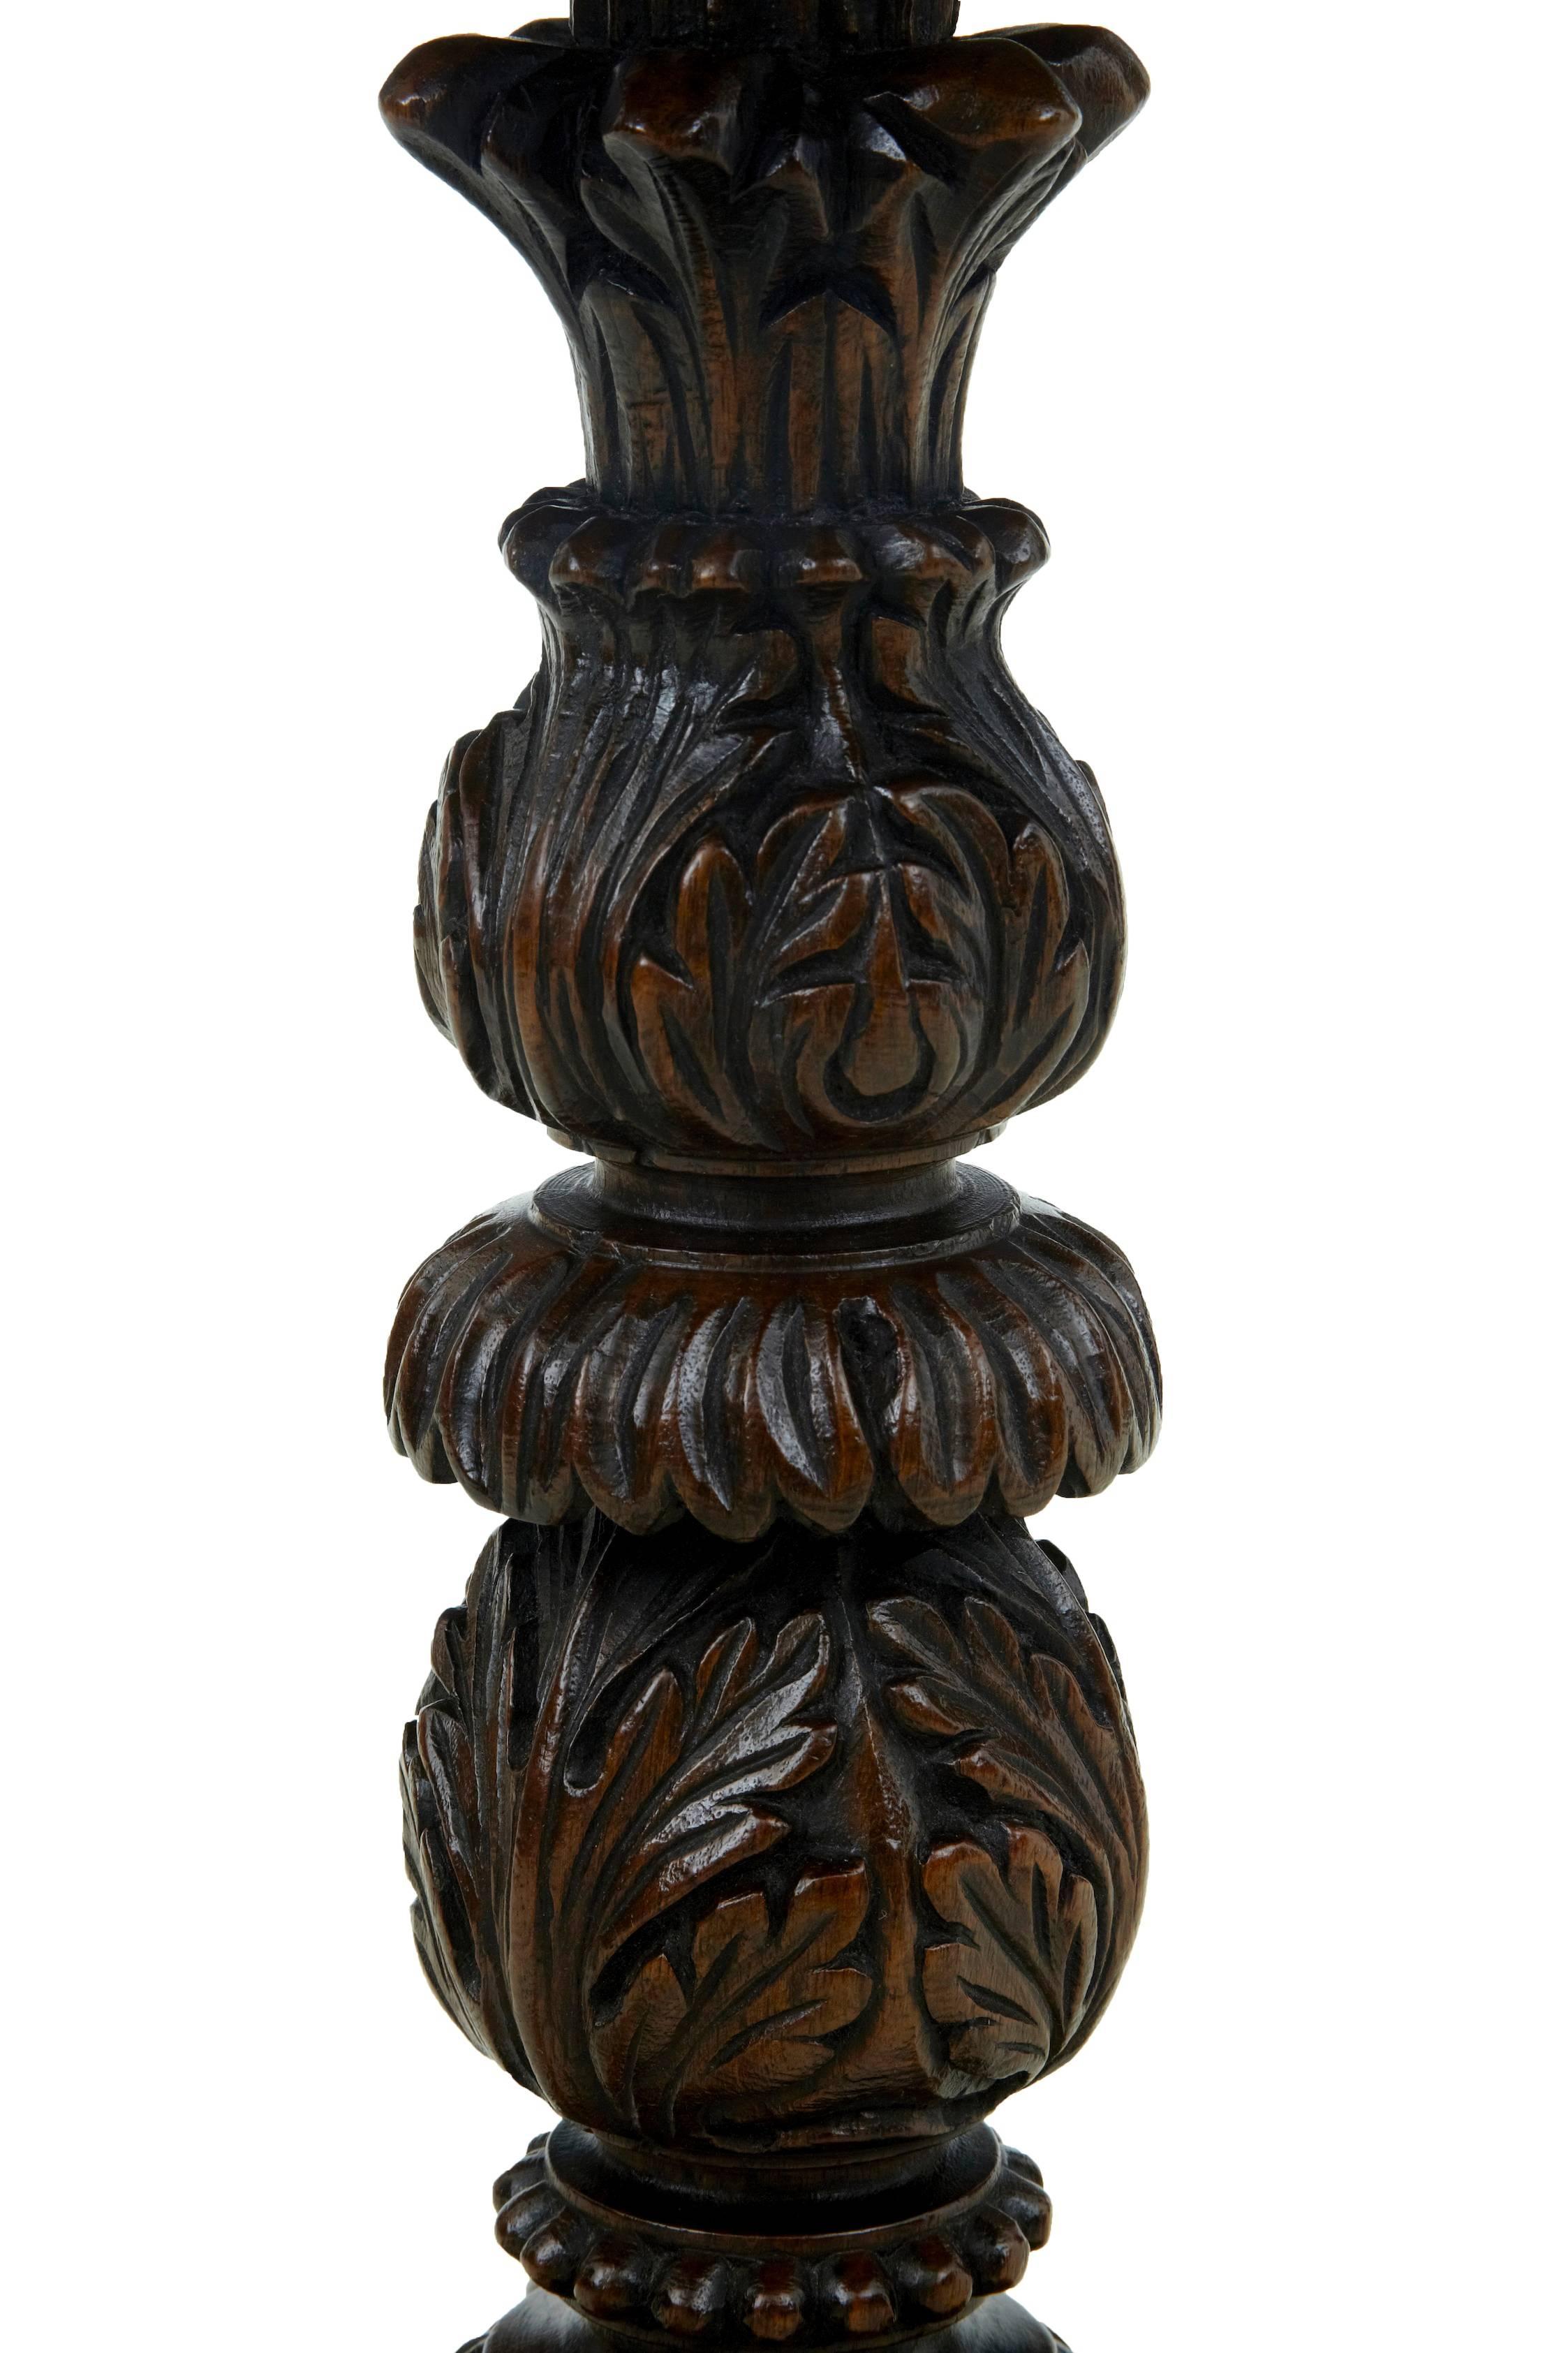 19th Century Carved Hardwood Ceylonese Flip-Top Tripod Table (19. Jahrhundert)